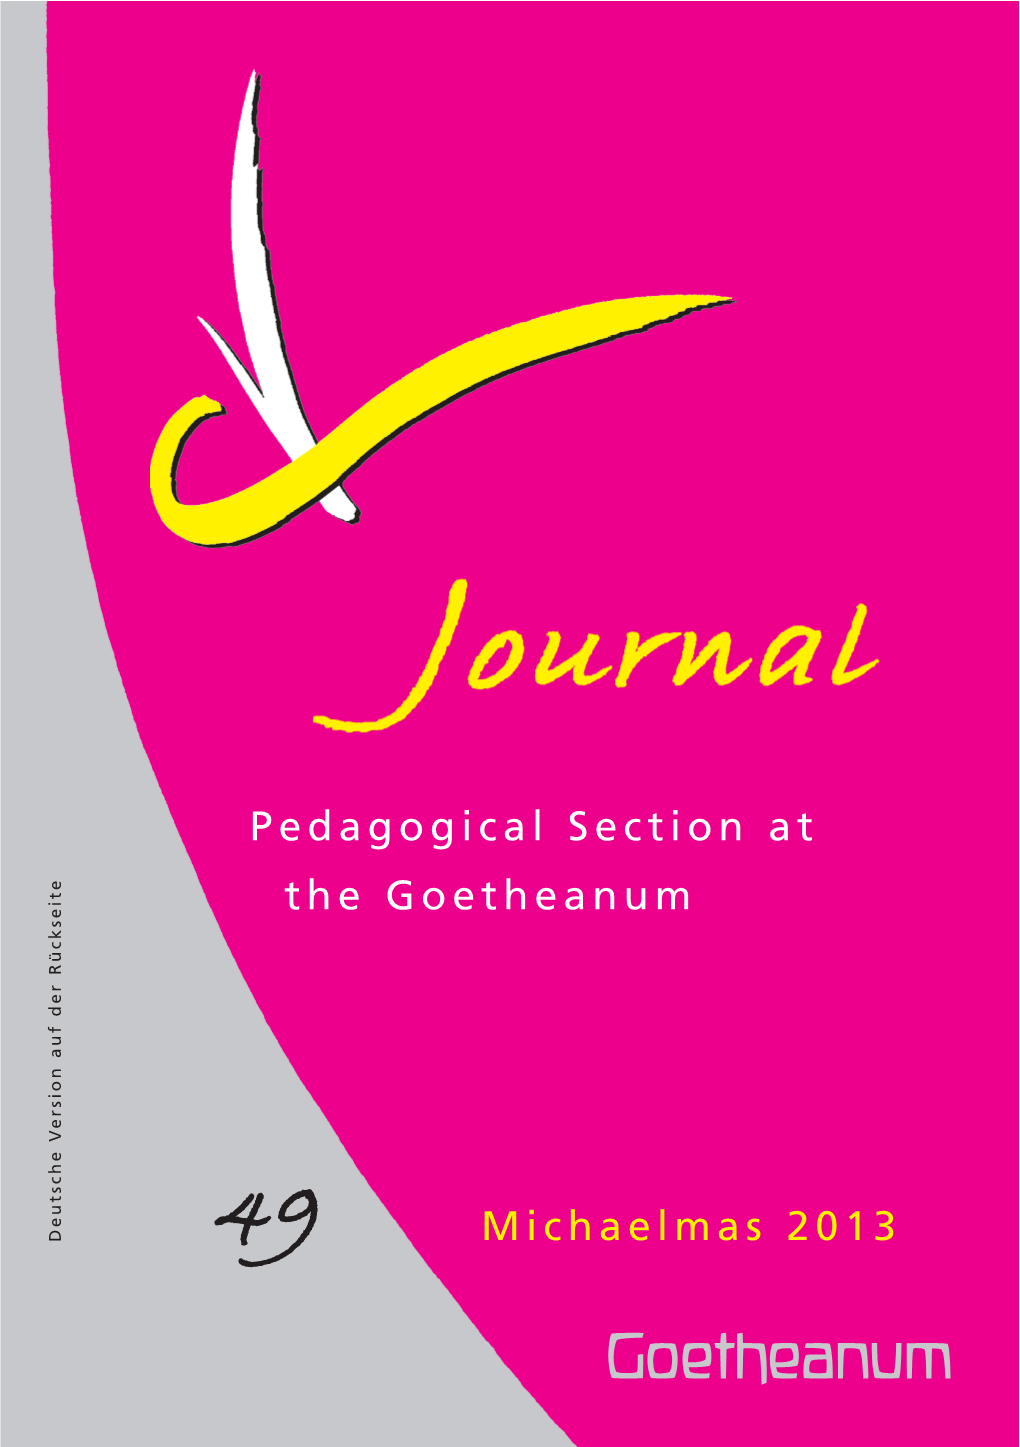 Michaelmas 2013 Goetheanum the Journal of the Pedagogical Section